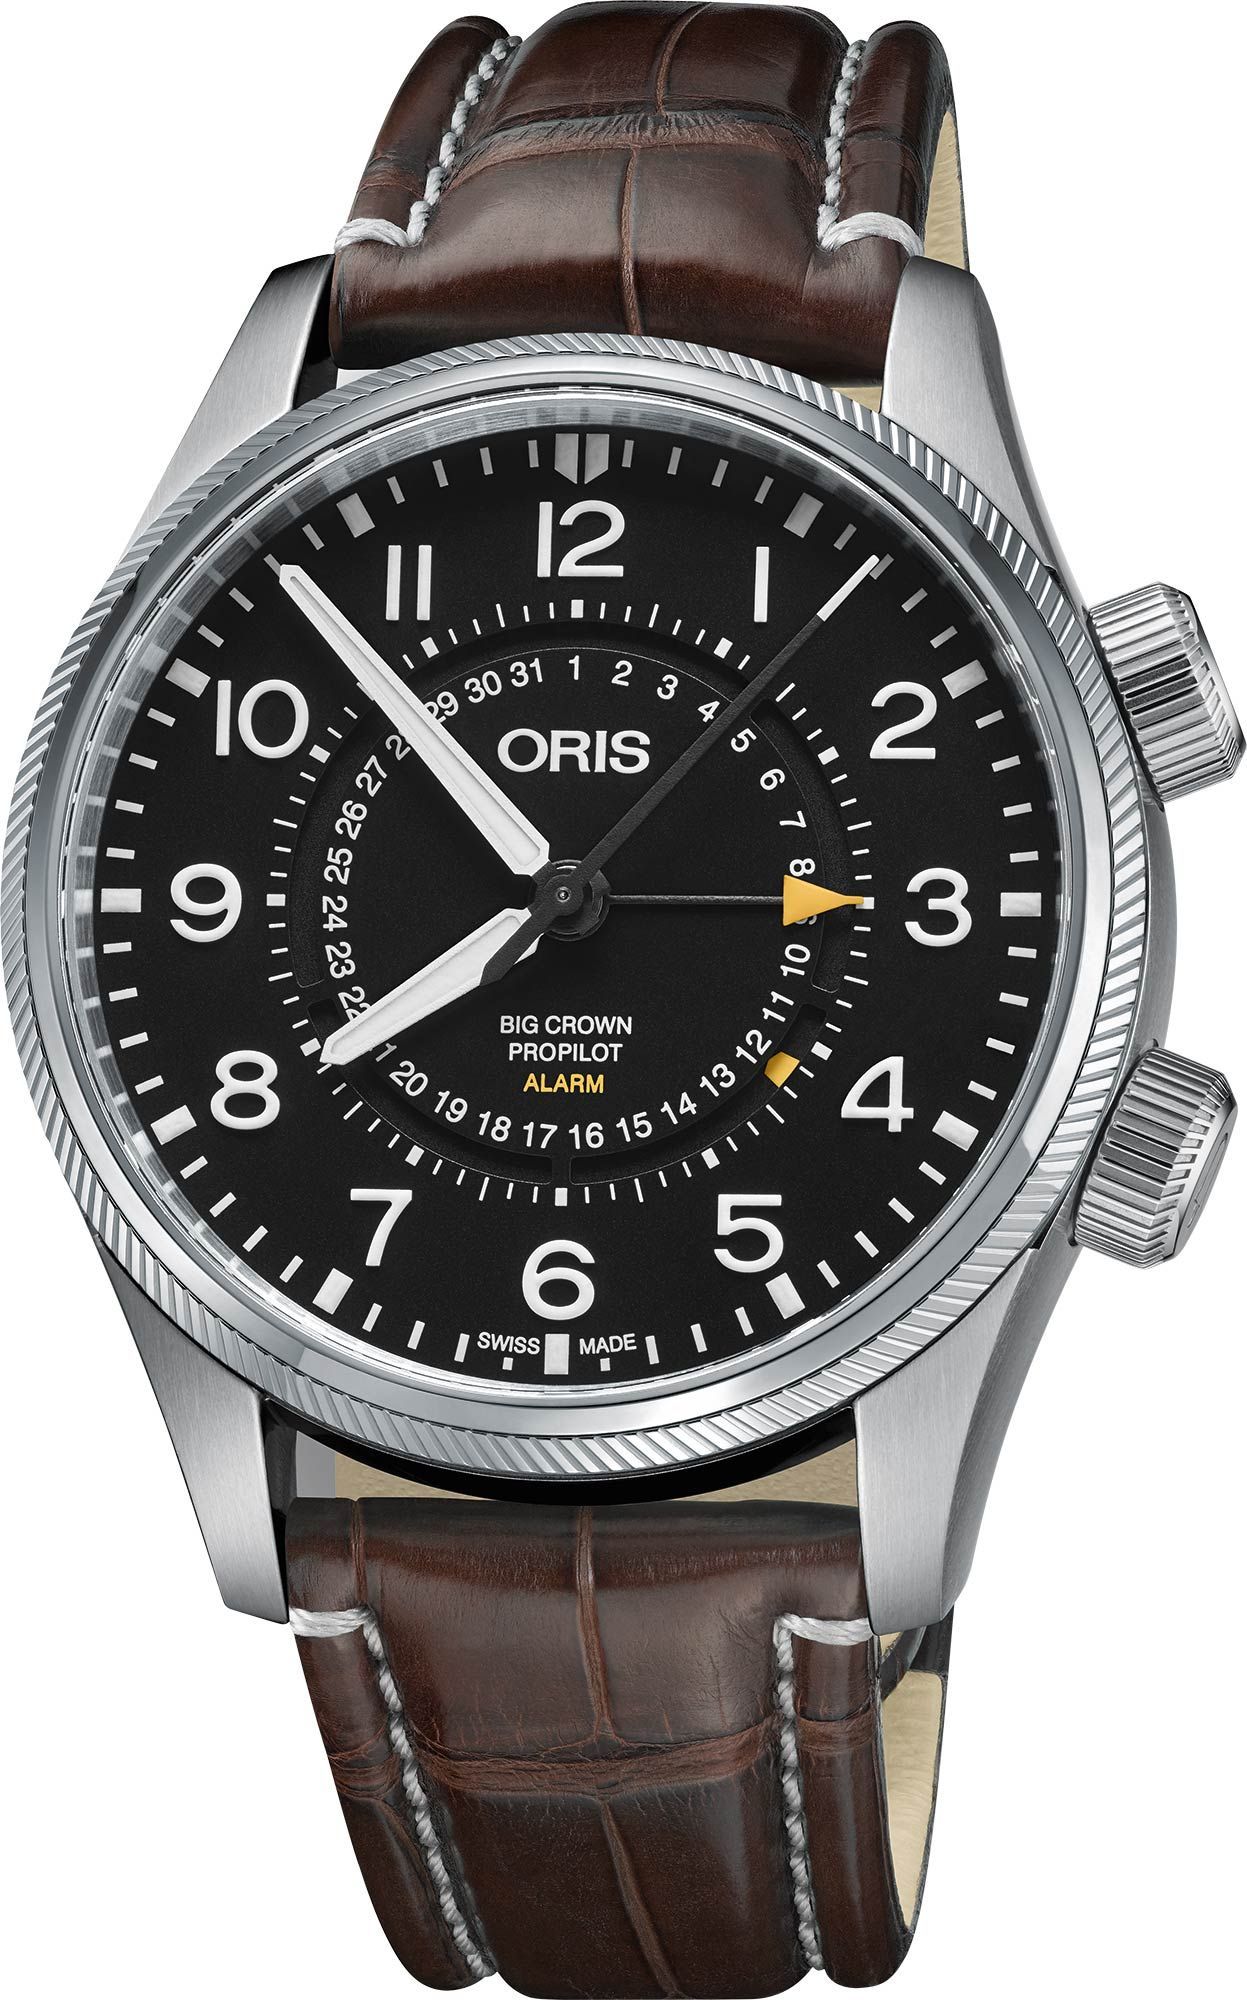 Oris Big Crown ProPilot Alarm Limited Edition 44 mm Watch in Black Dial For Men - 1